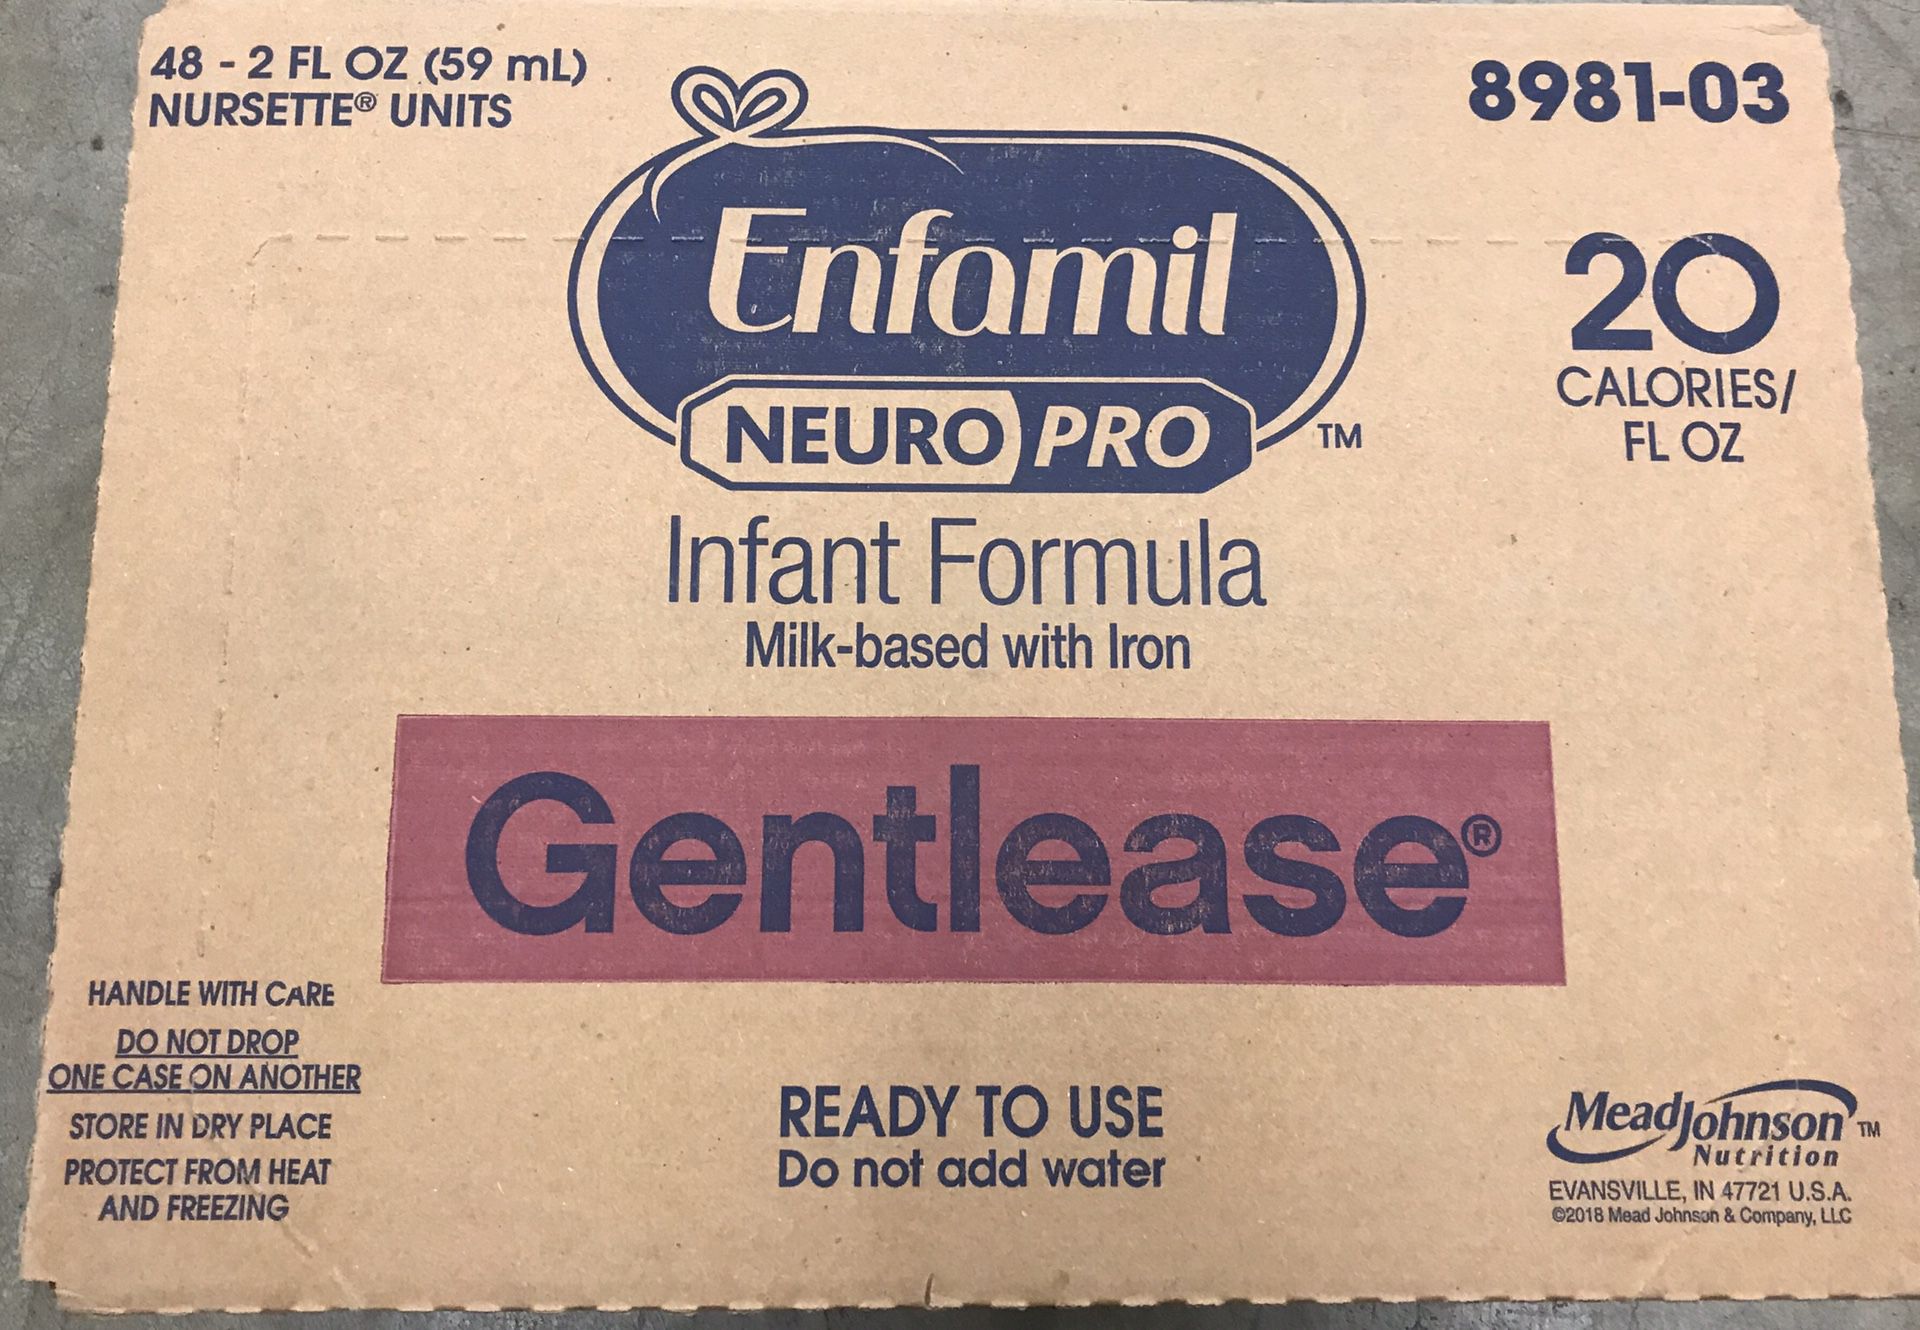 GENTLEASE - Enfamil NEUROPRO Infant Formula Milk-based with Iron. (Mead Johnson Company product) 2 OZ